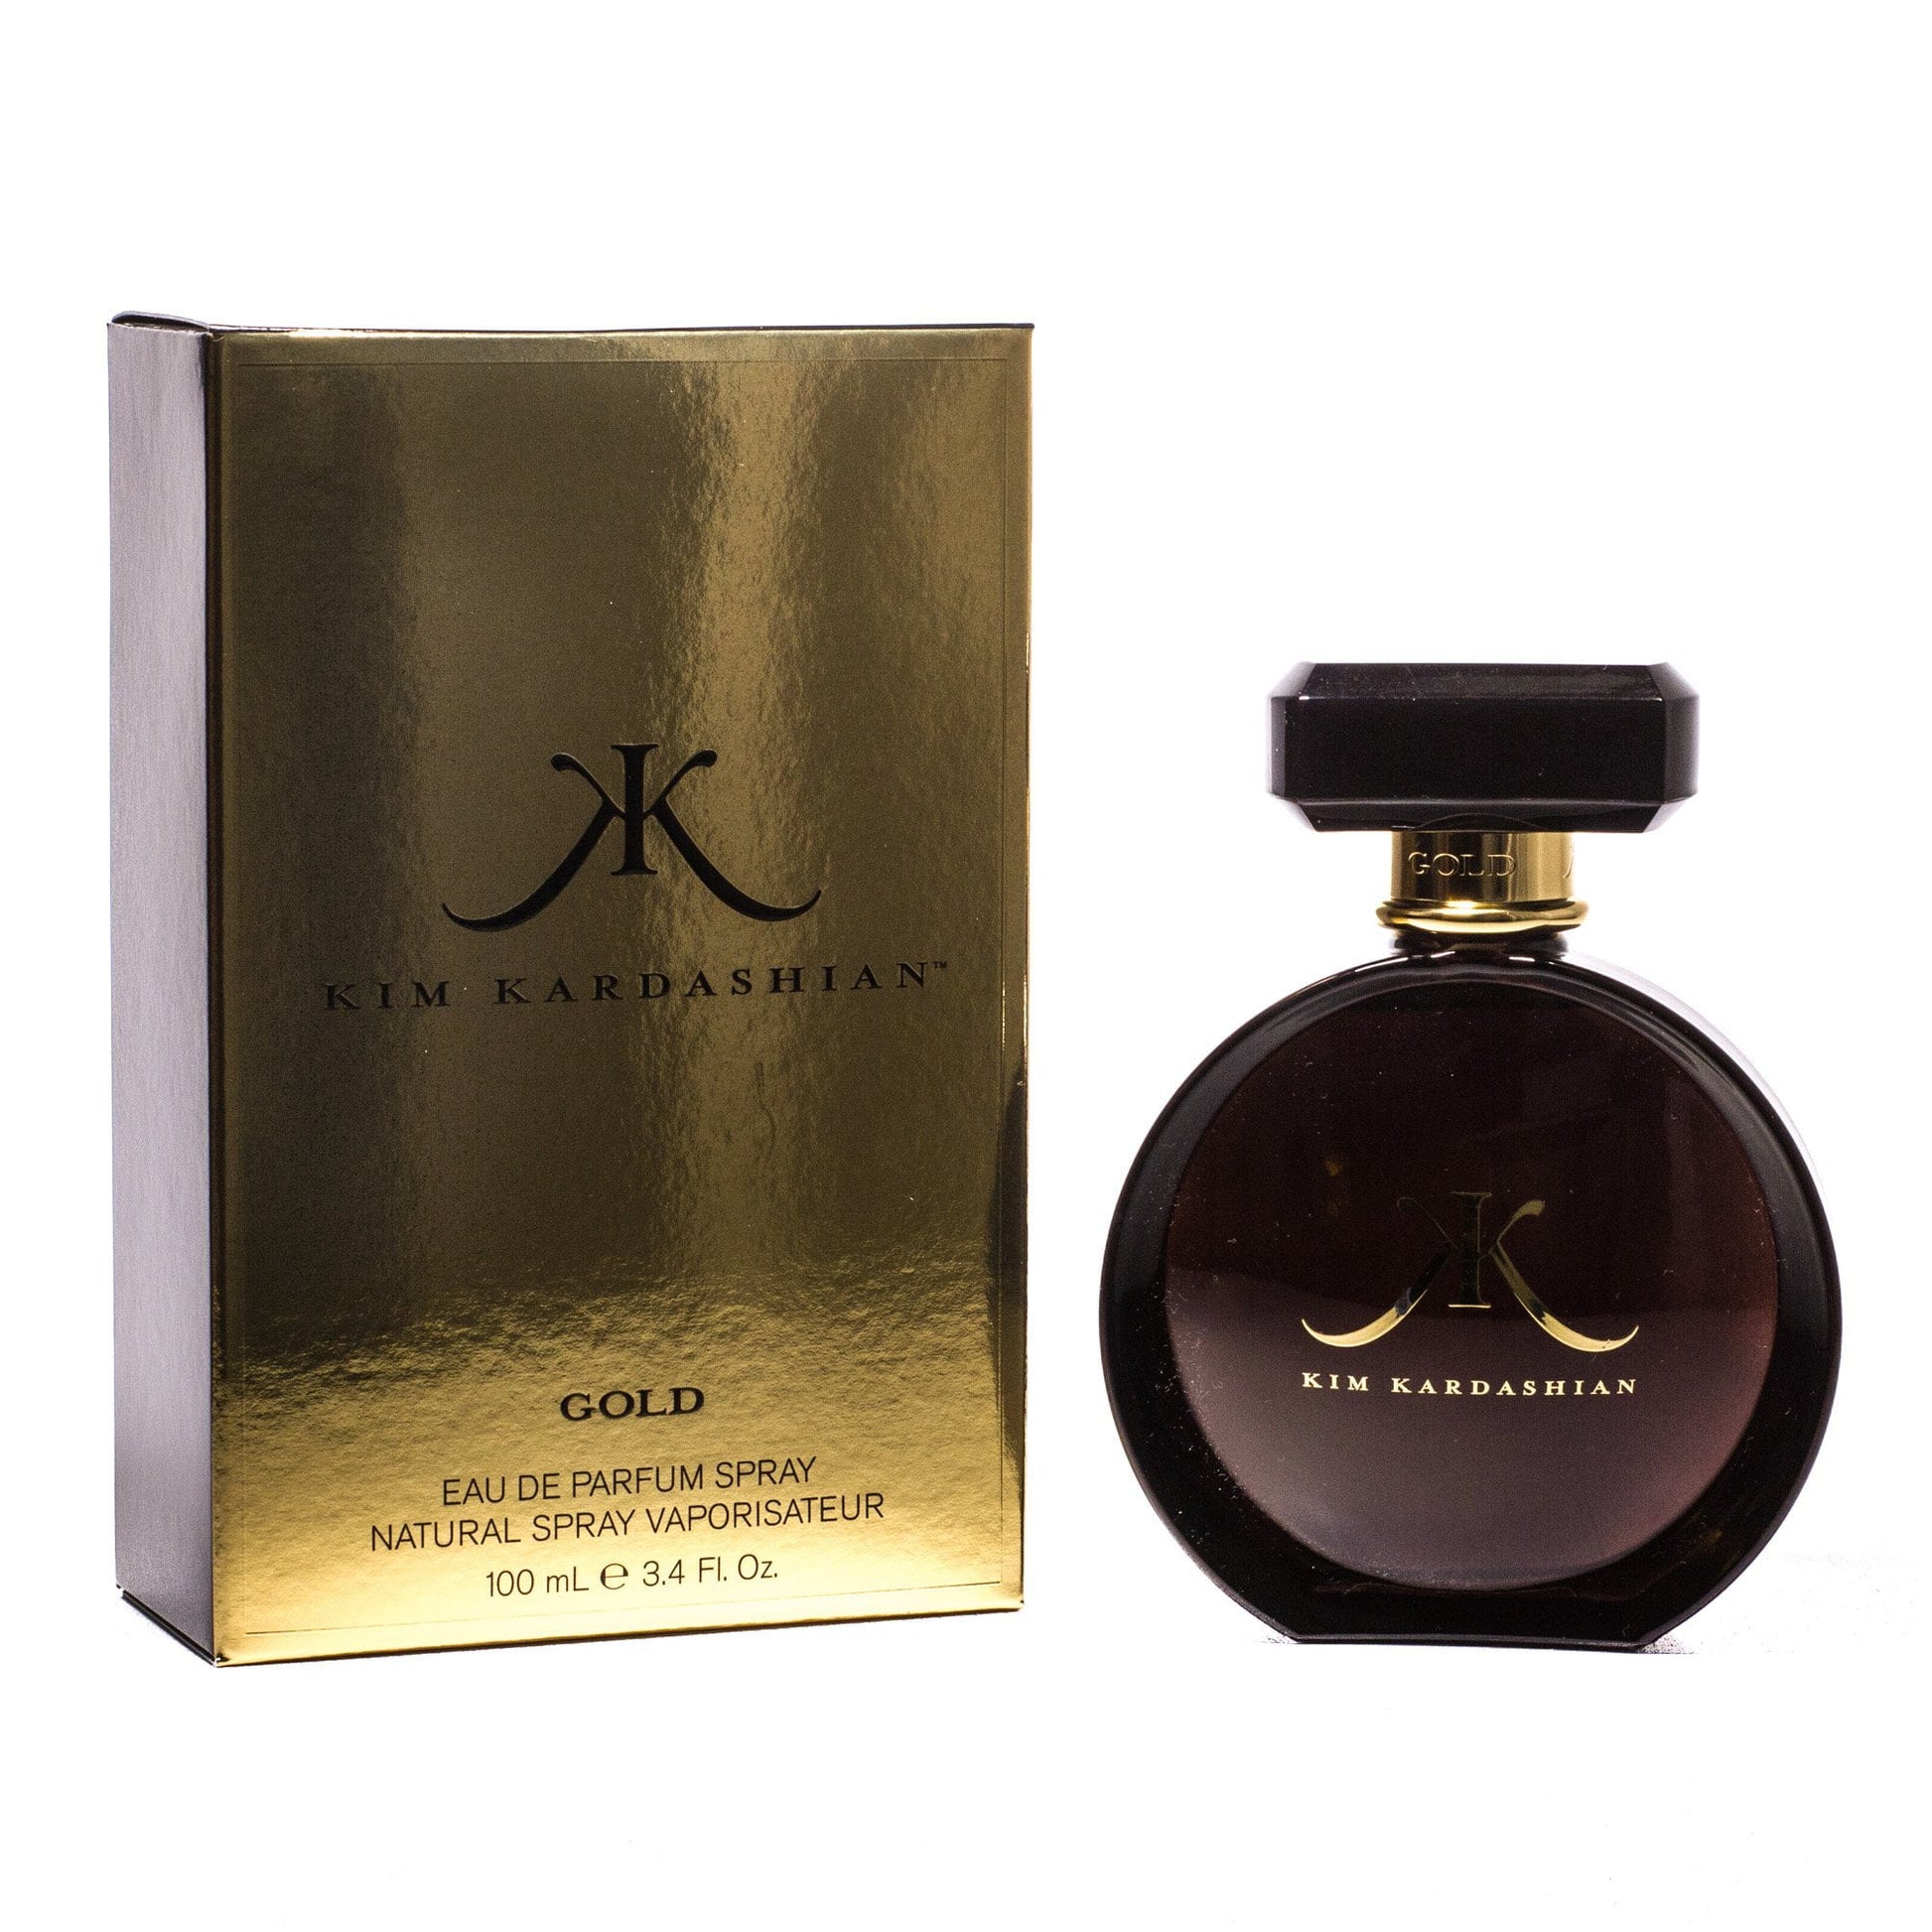 Kim Kardashian Gold Eau de Parfum Spray for Women by Kim Kardashian, Product image 1